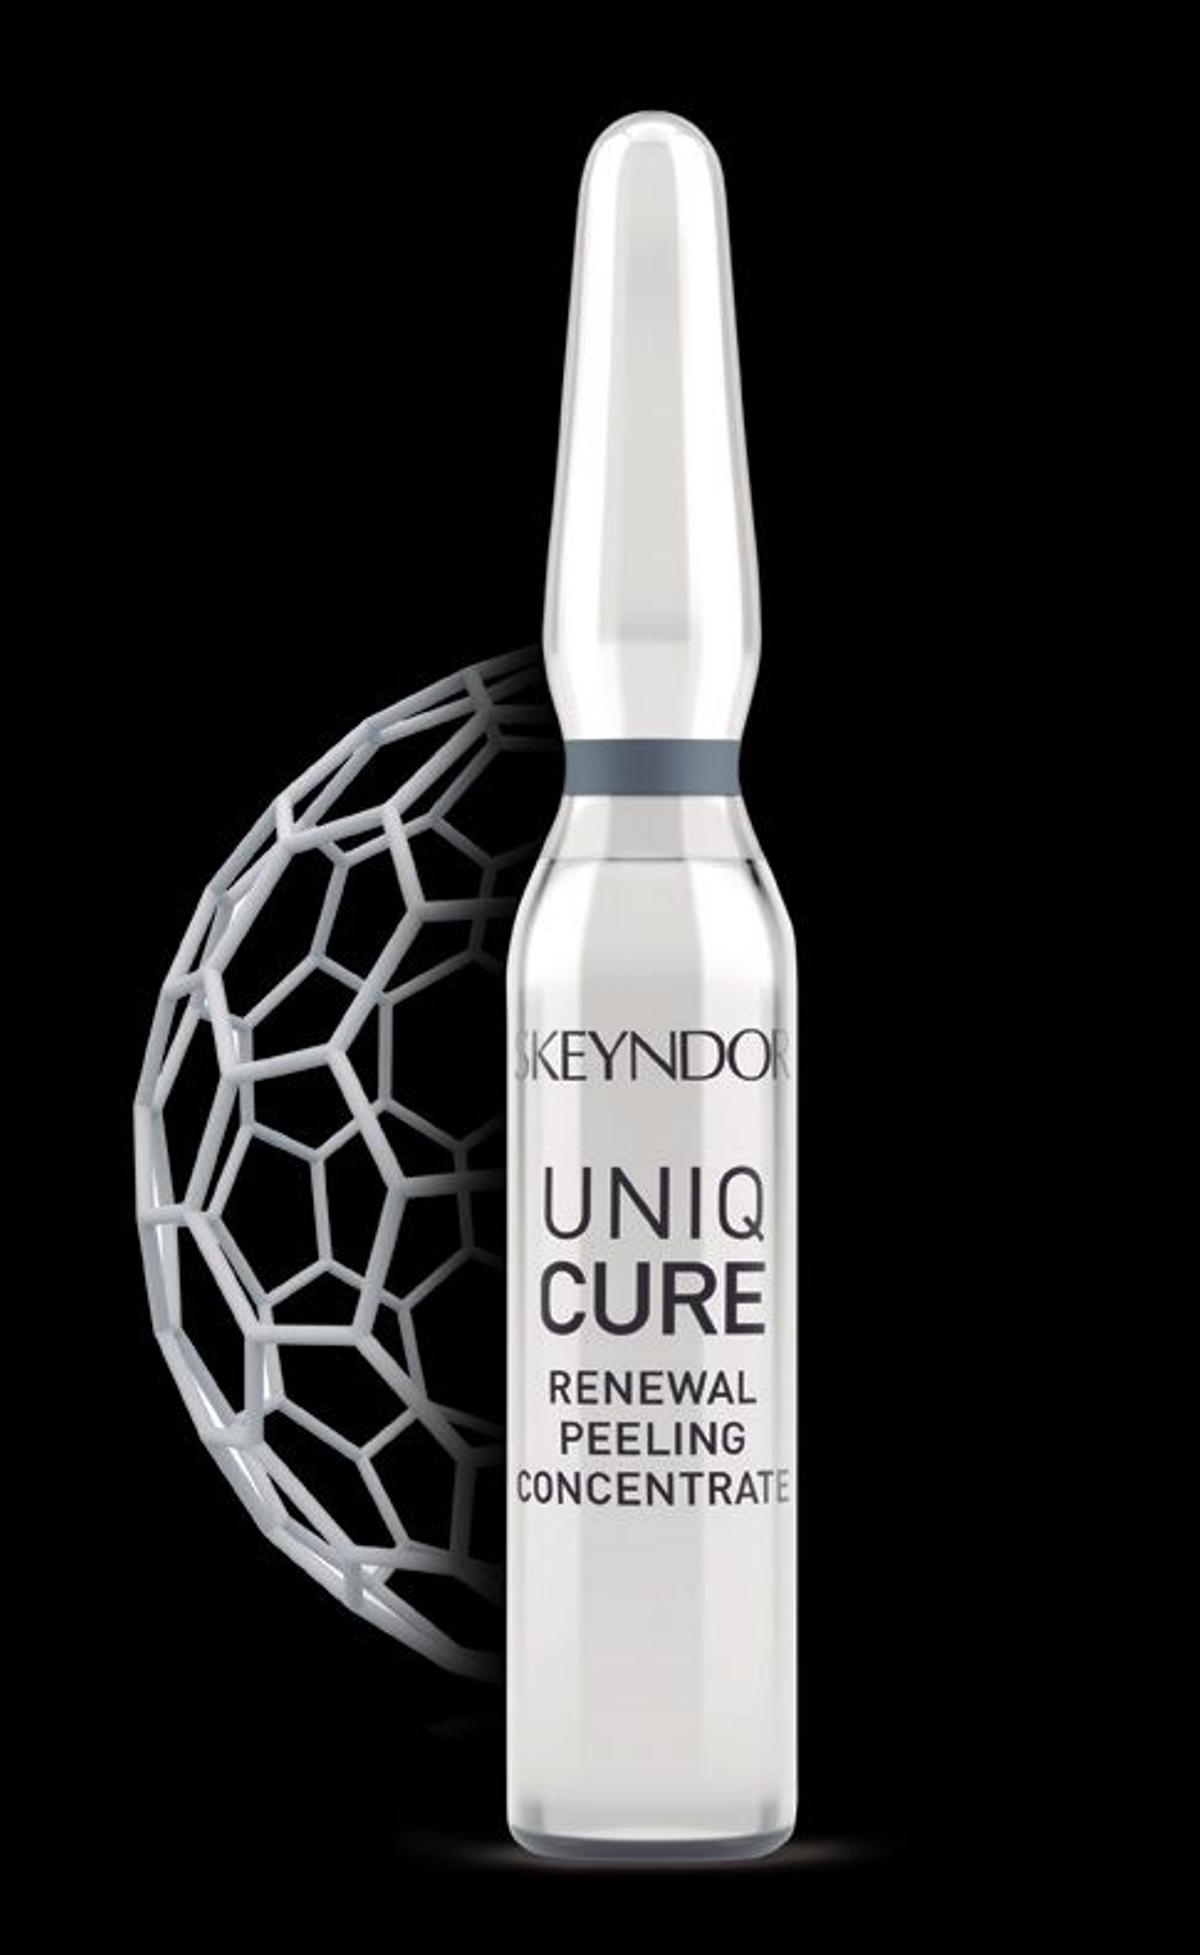 Uniqcure - Renewal Peeling Concentrate